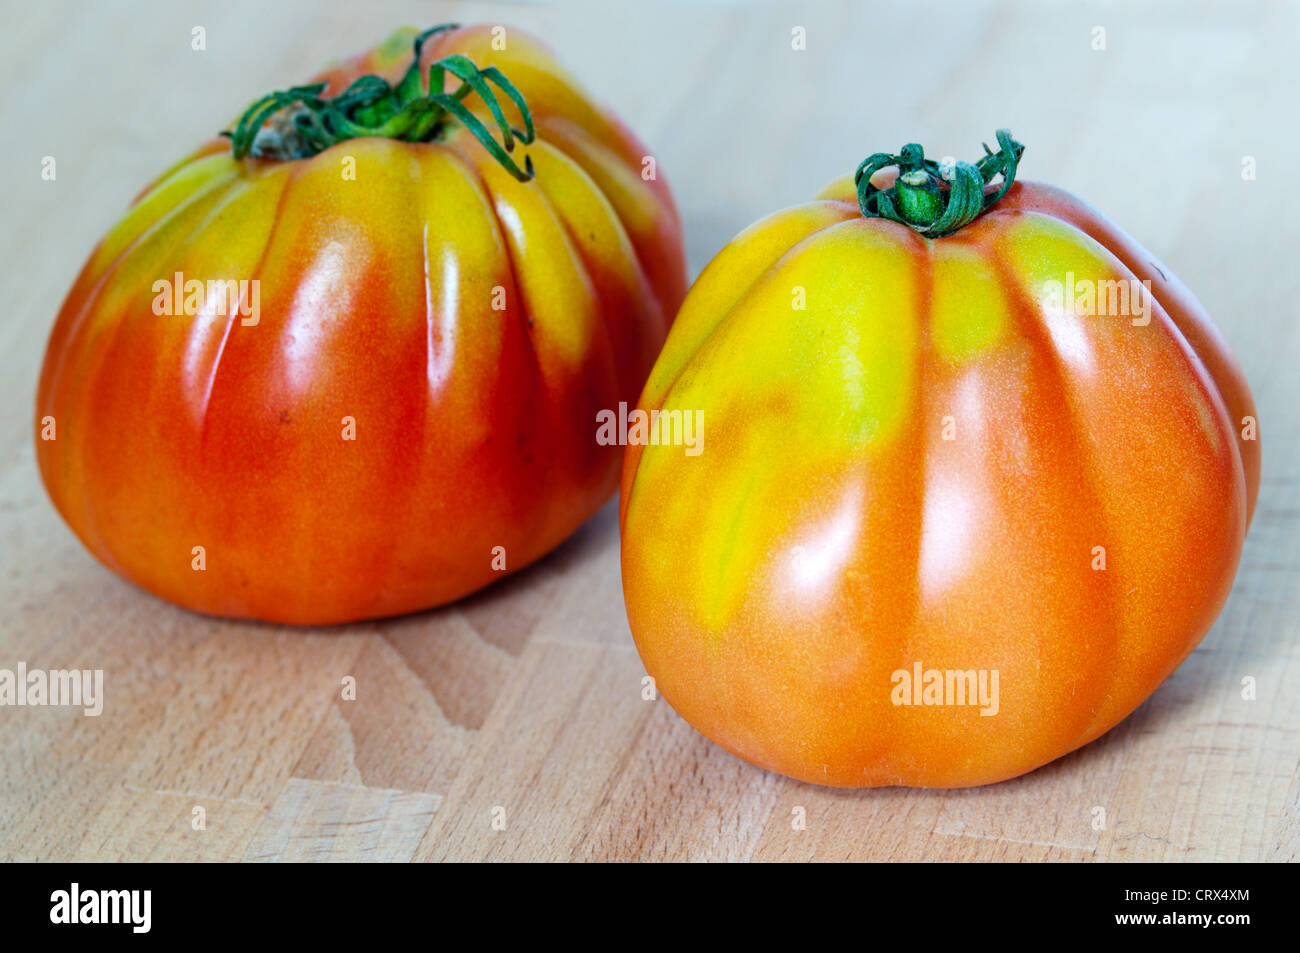 Two Italian Cuore di Bue tomatoes. Stock Photo